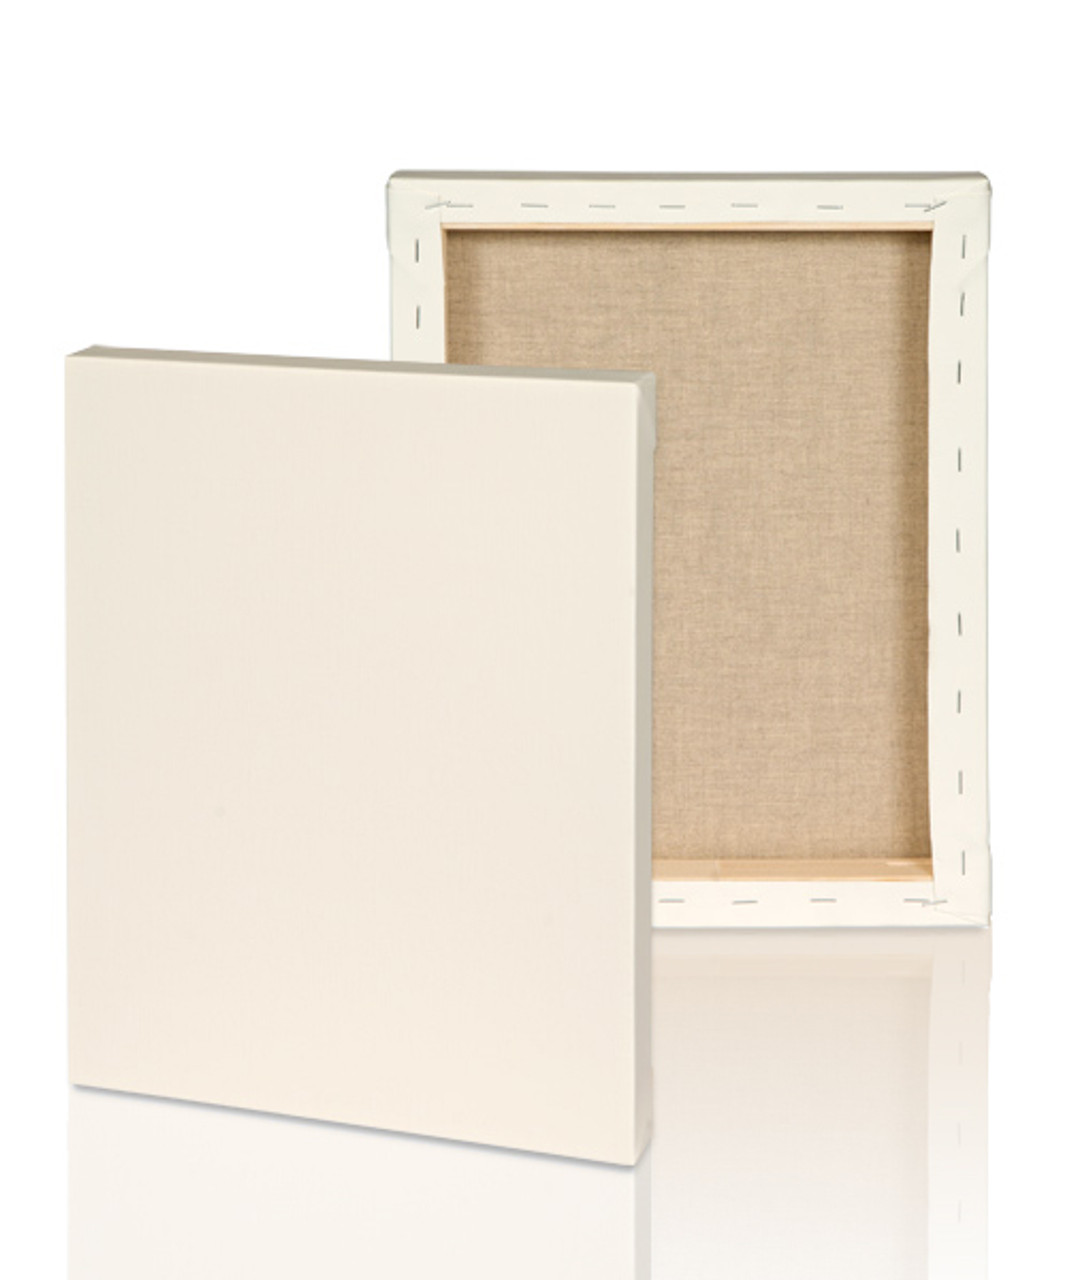 Medium Grain :1-1/2" Stretched Linen canvas 20X30: Box of 5